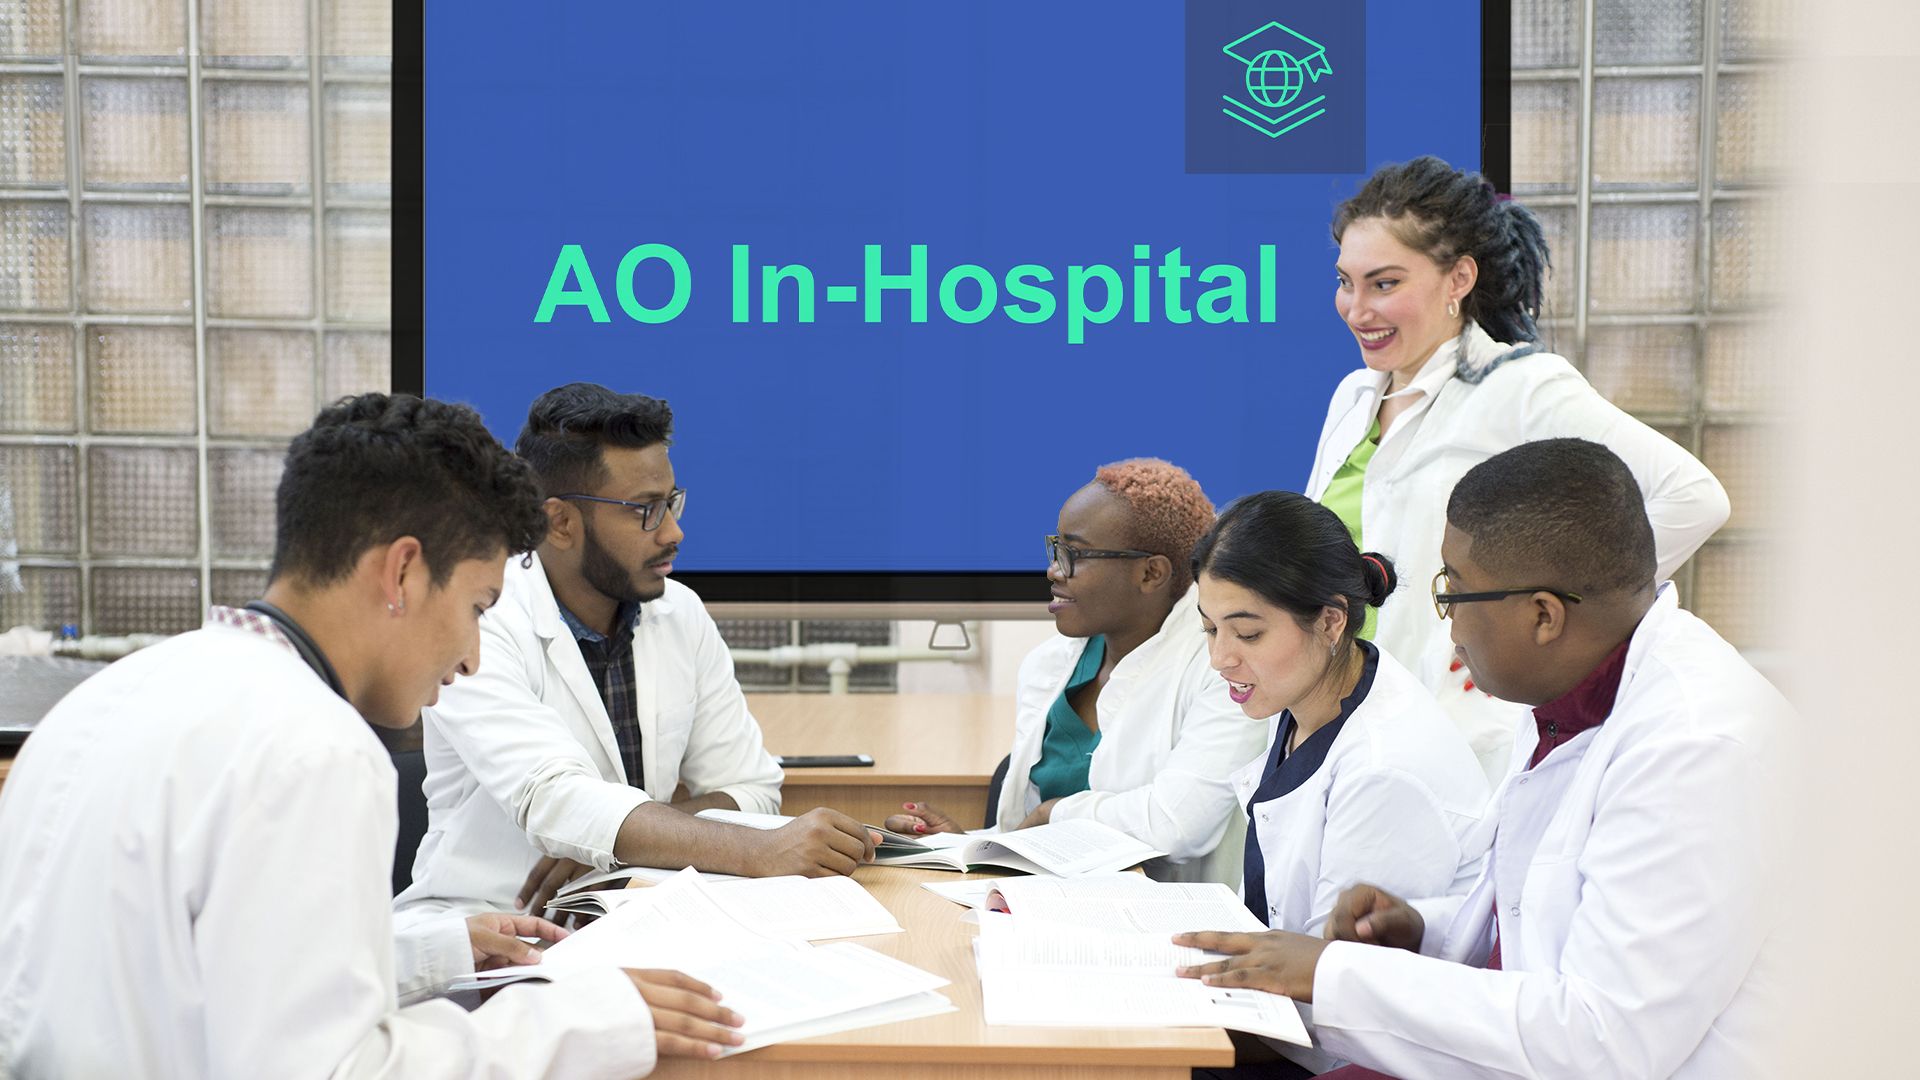 AO In-Hospital events earn enthusiastic feedback